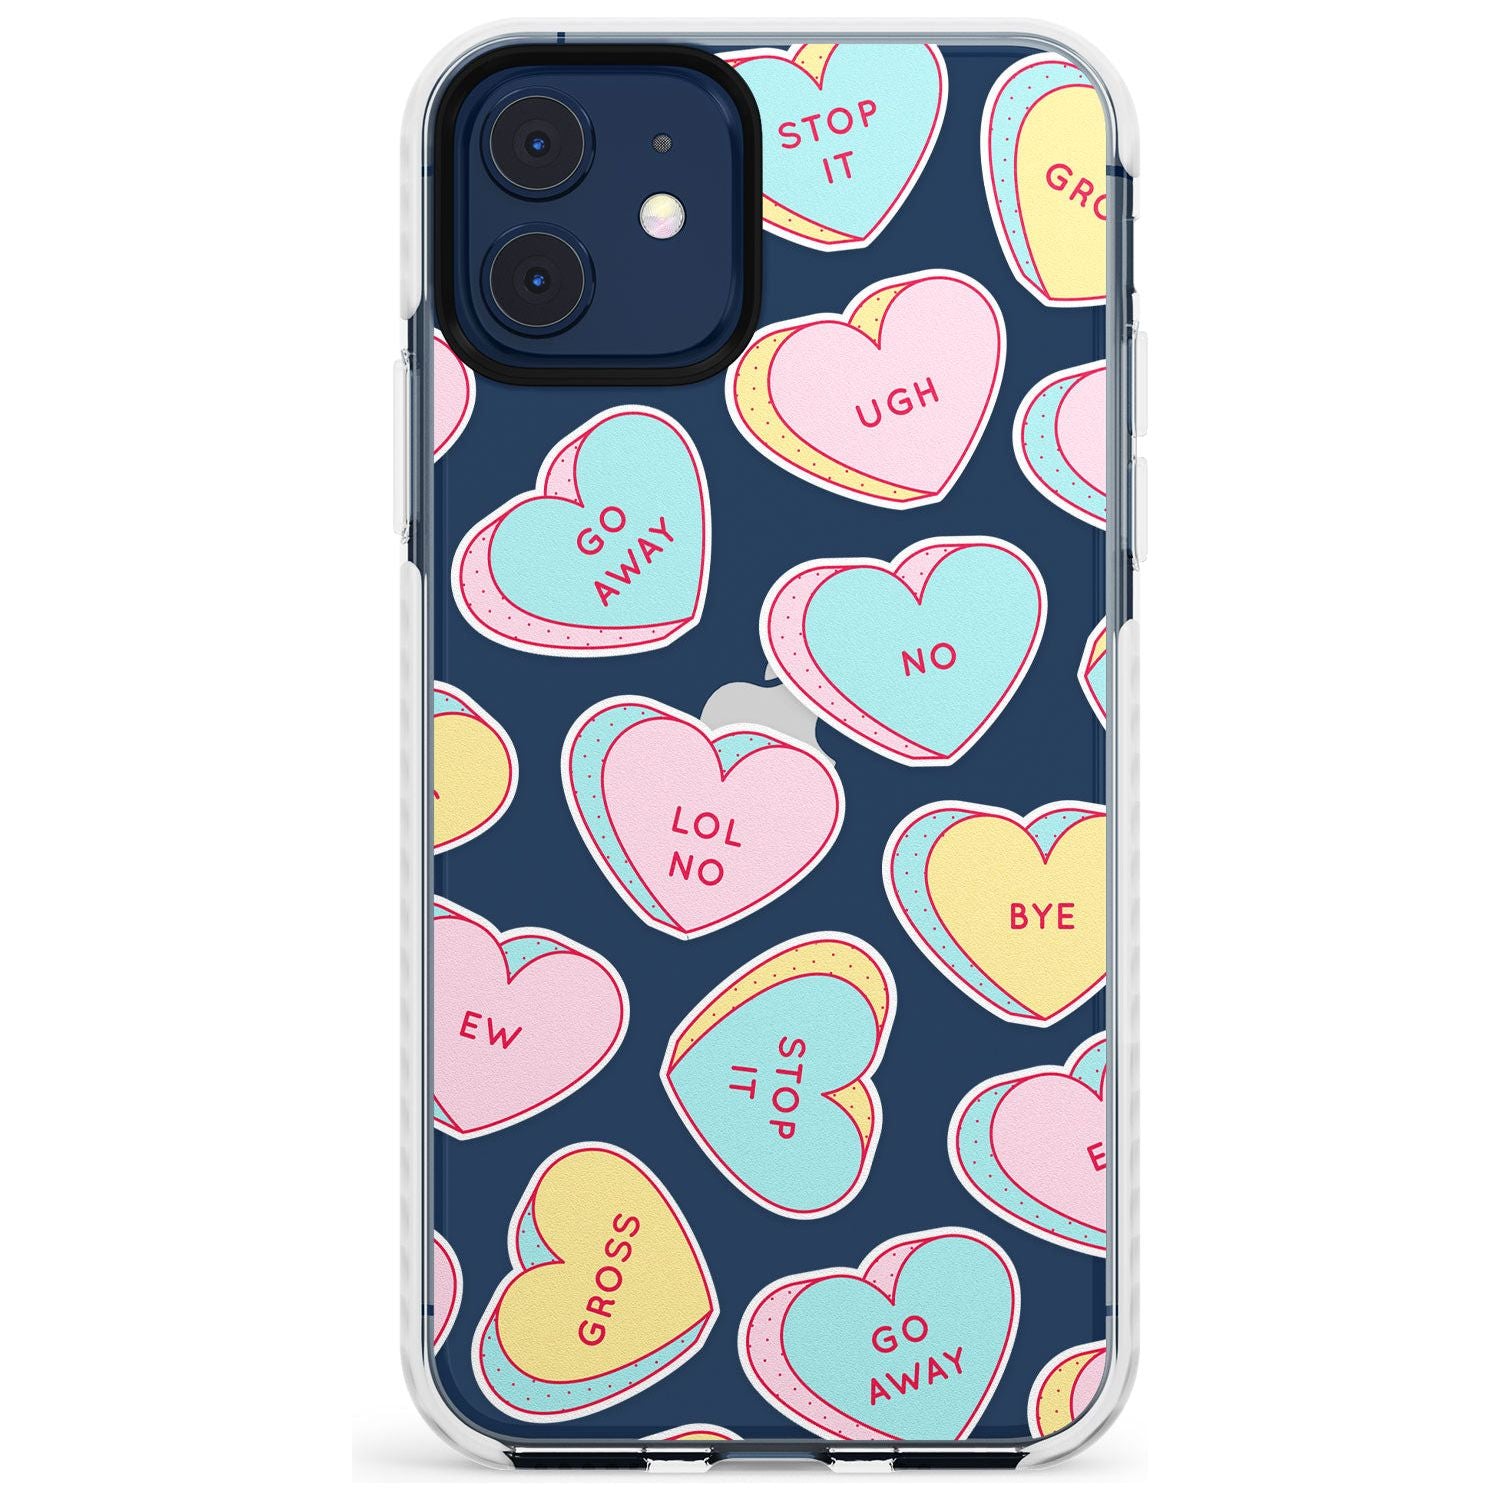 Sarcastic Love Hearts Slim TPU Phone Case for iPhone 11